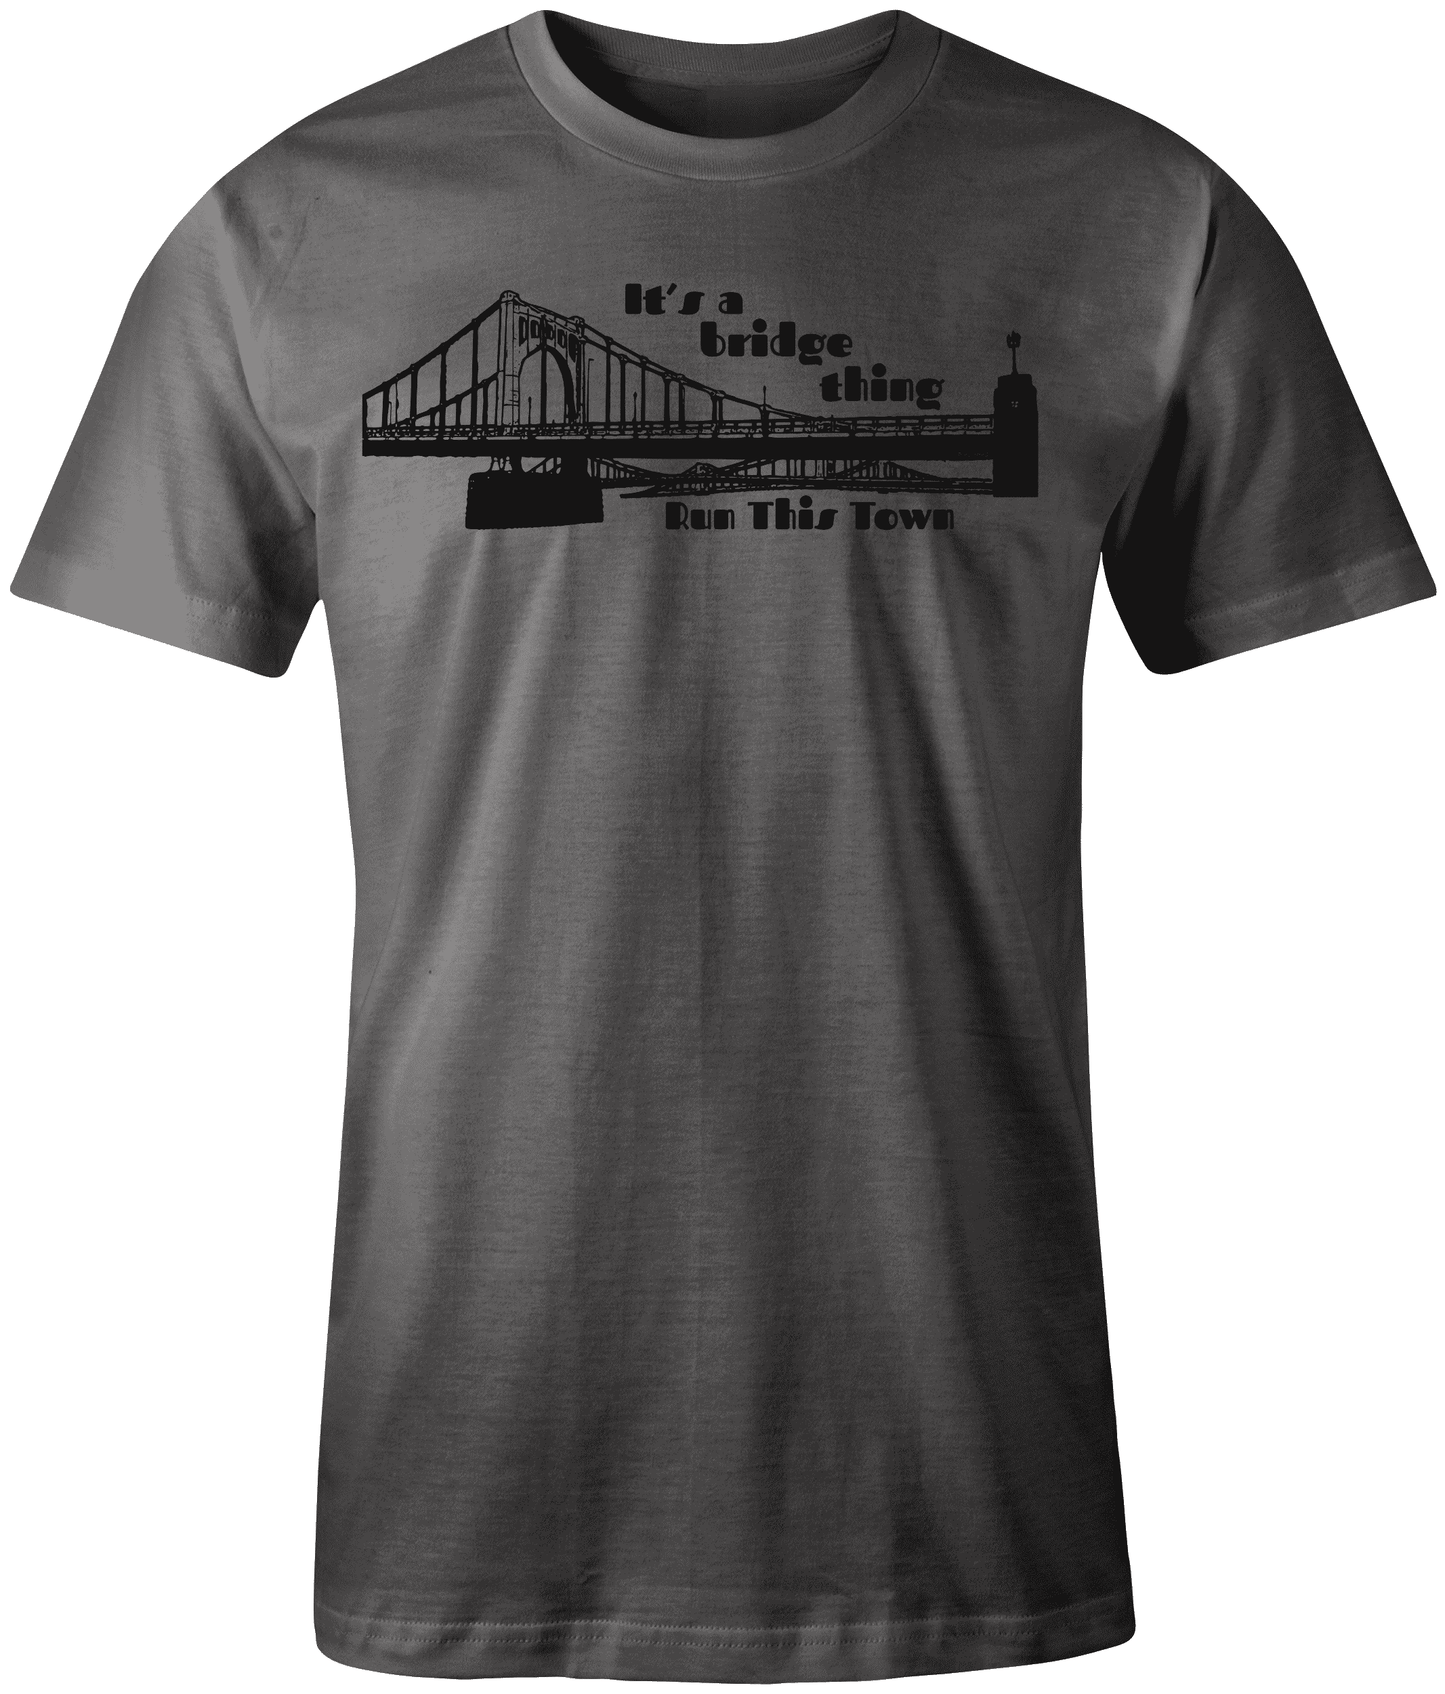 Unisex black crew neck t-shirt with black distressed graphic image of a bridge text it's a bridge thing above the bridge, text run this town below the bridge 